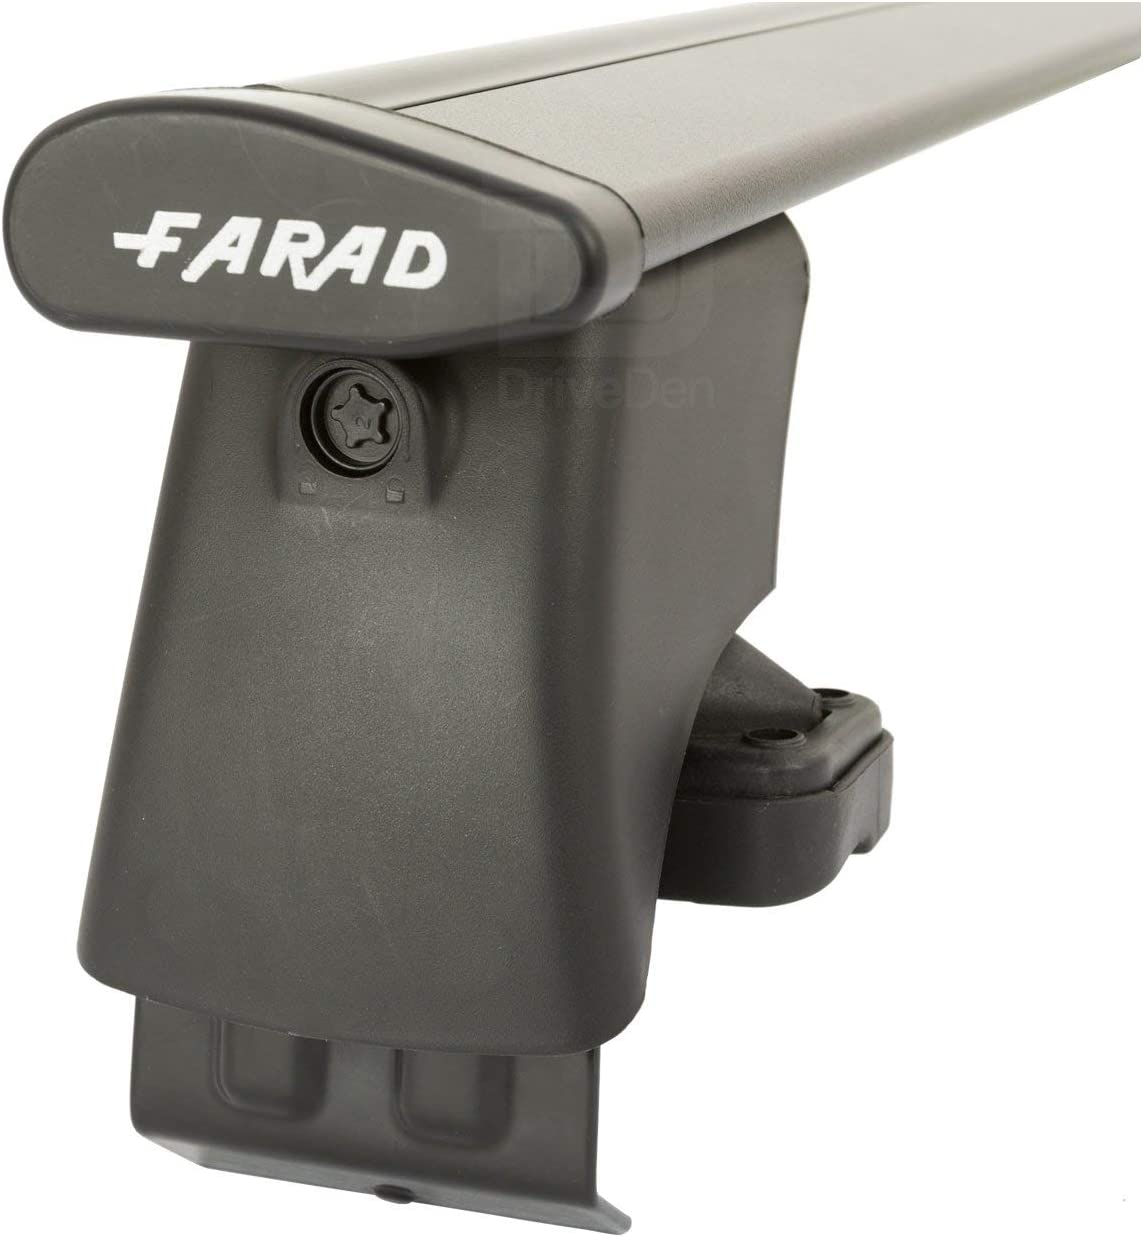 FARAD-Kit H2 per barre portatutto - Volkswagen Passat 2015> (senza corrimano)